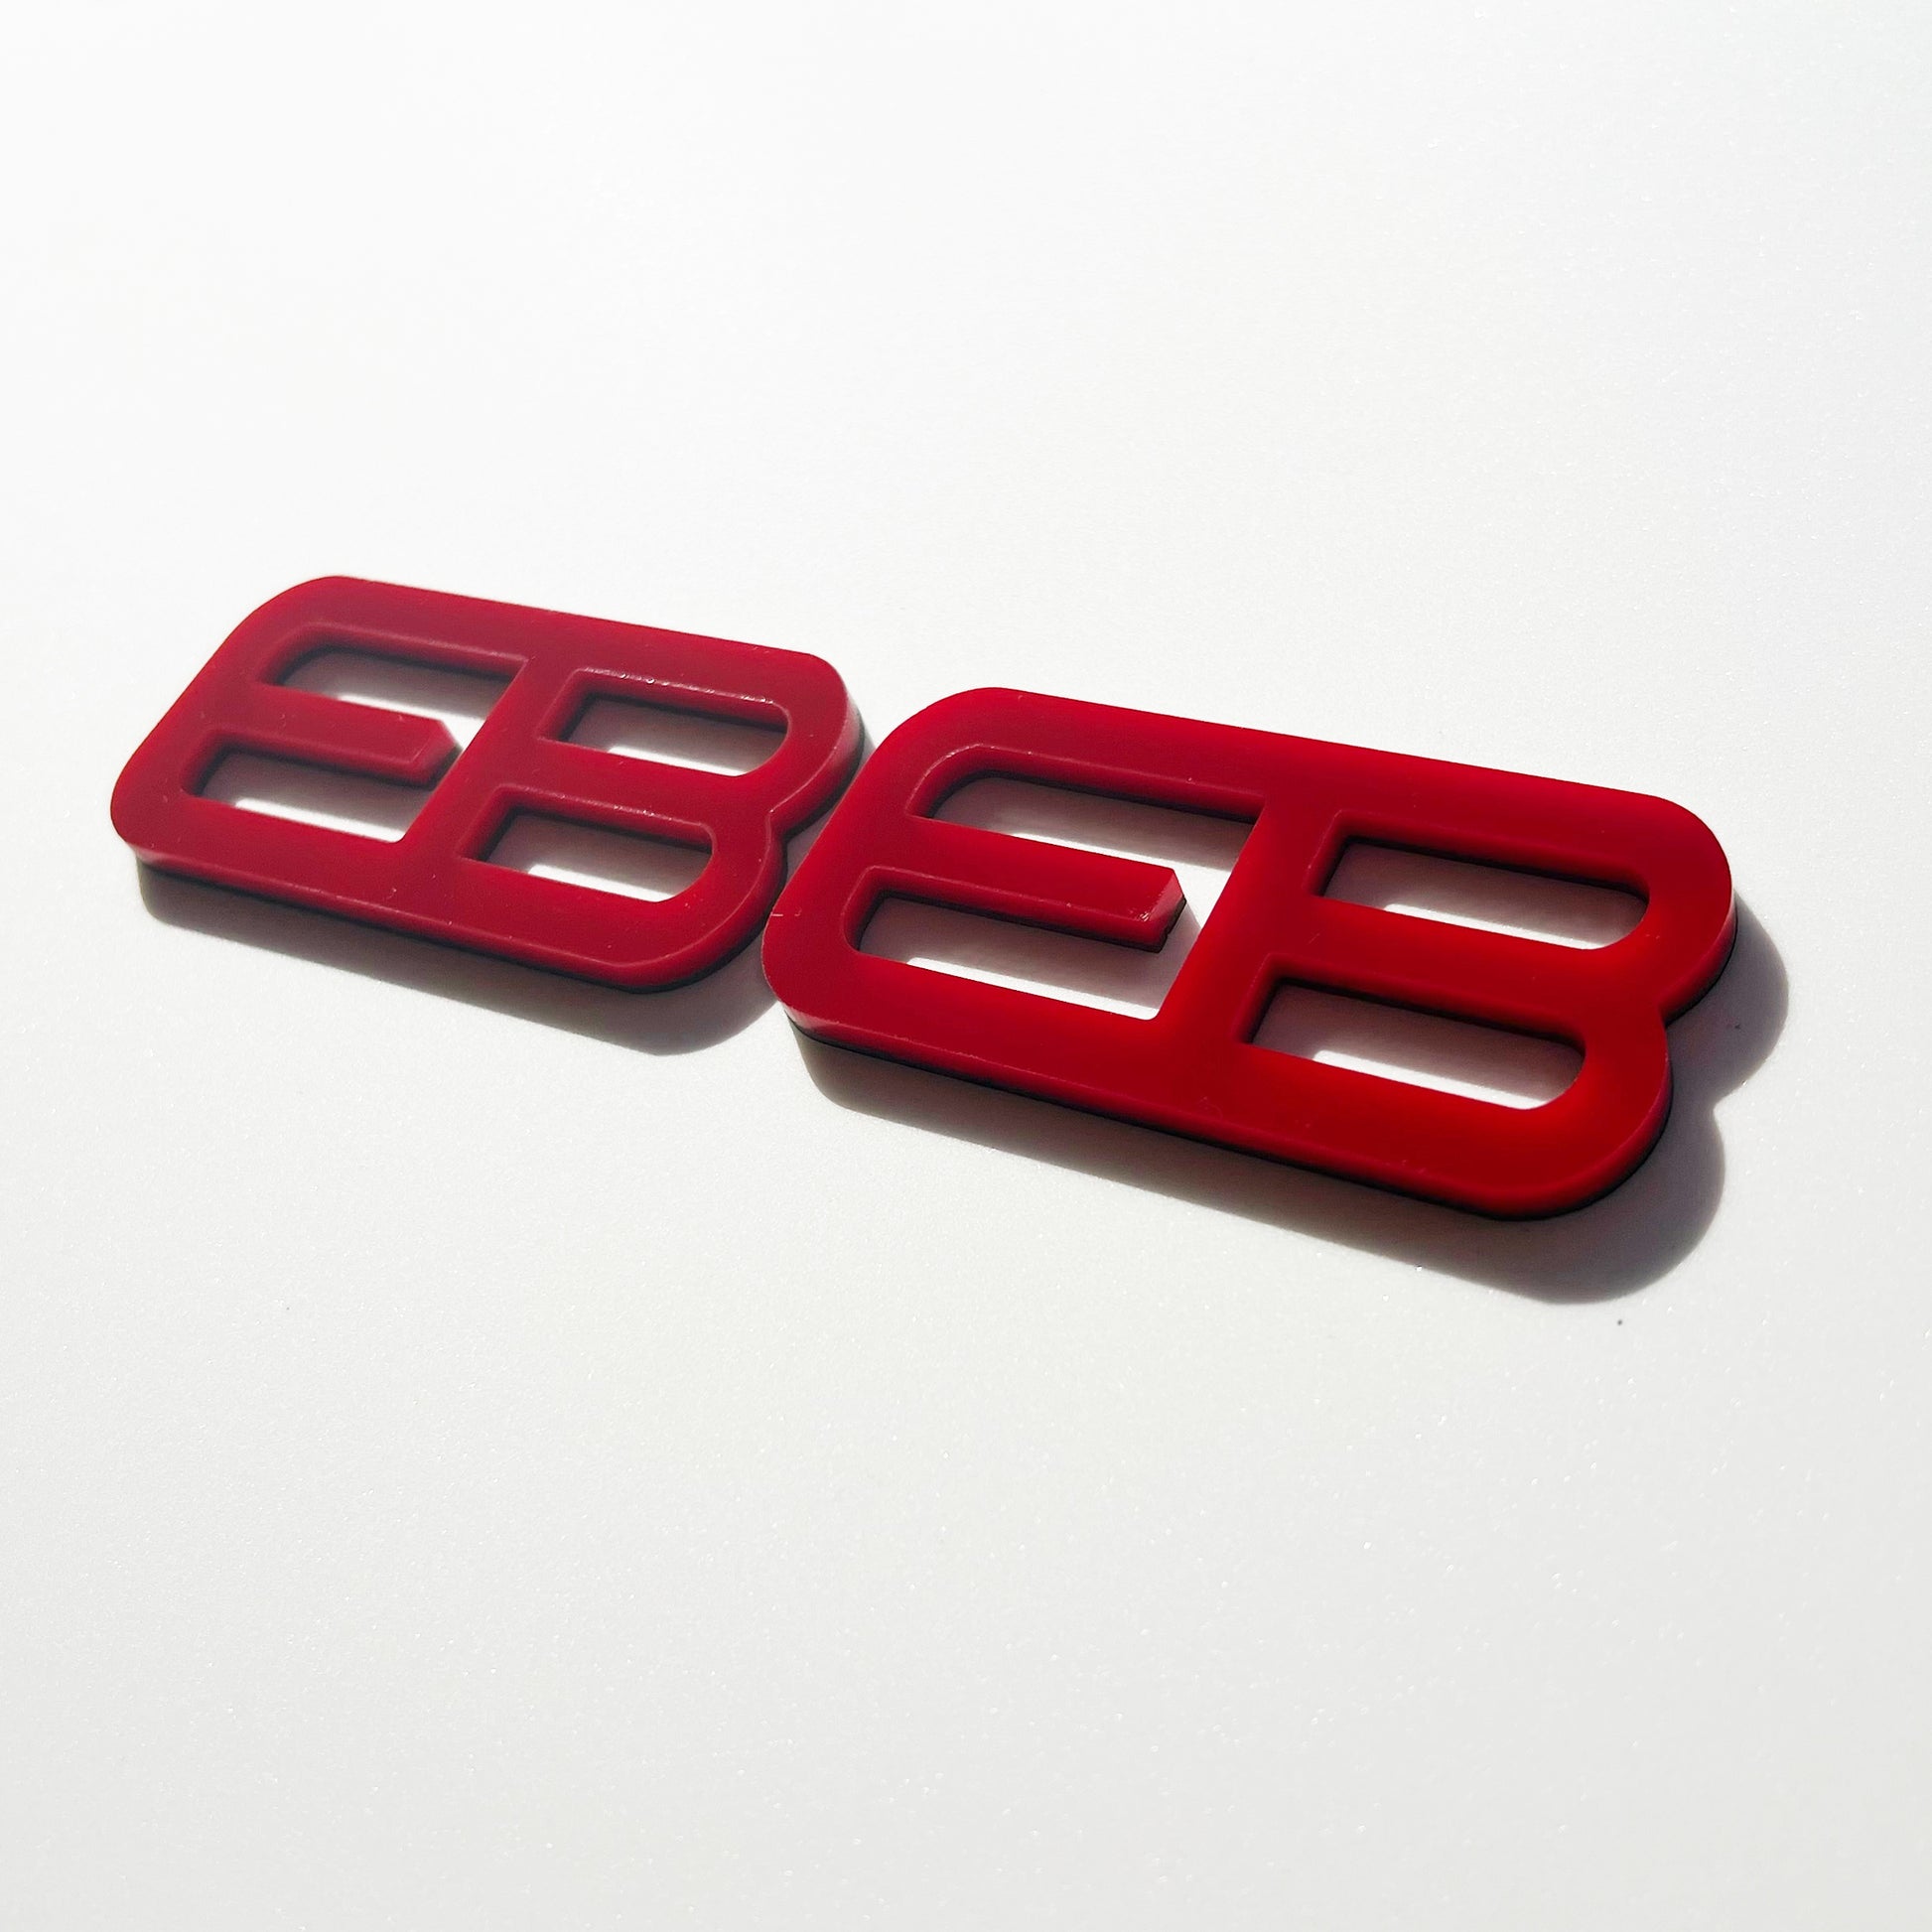 F150 EcoBeast Fender Badges - Pair